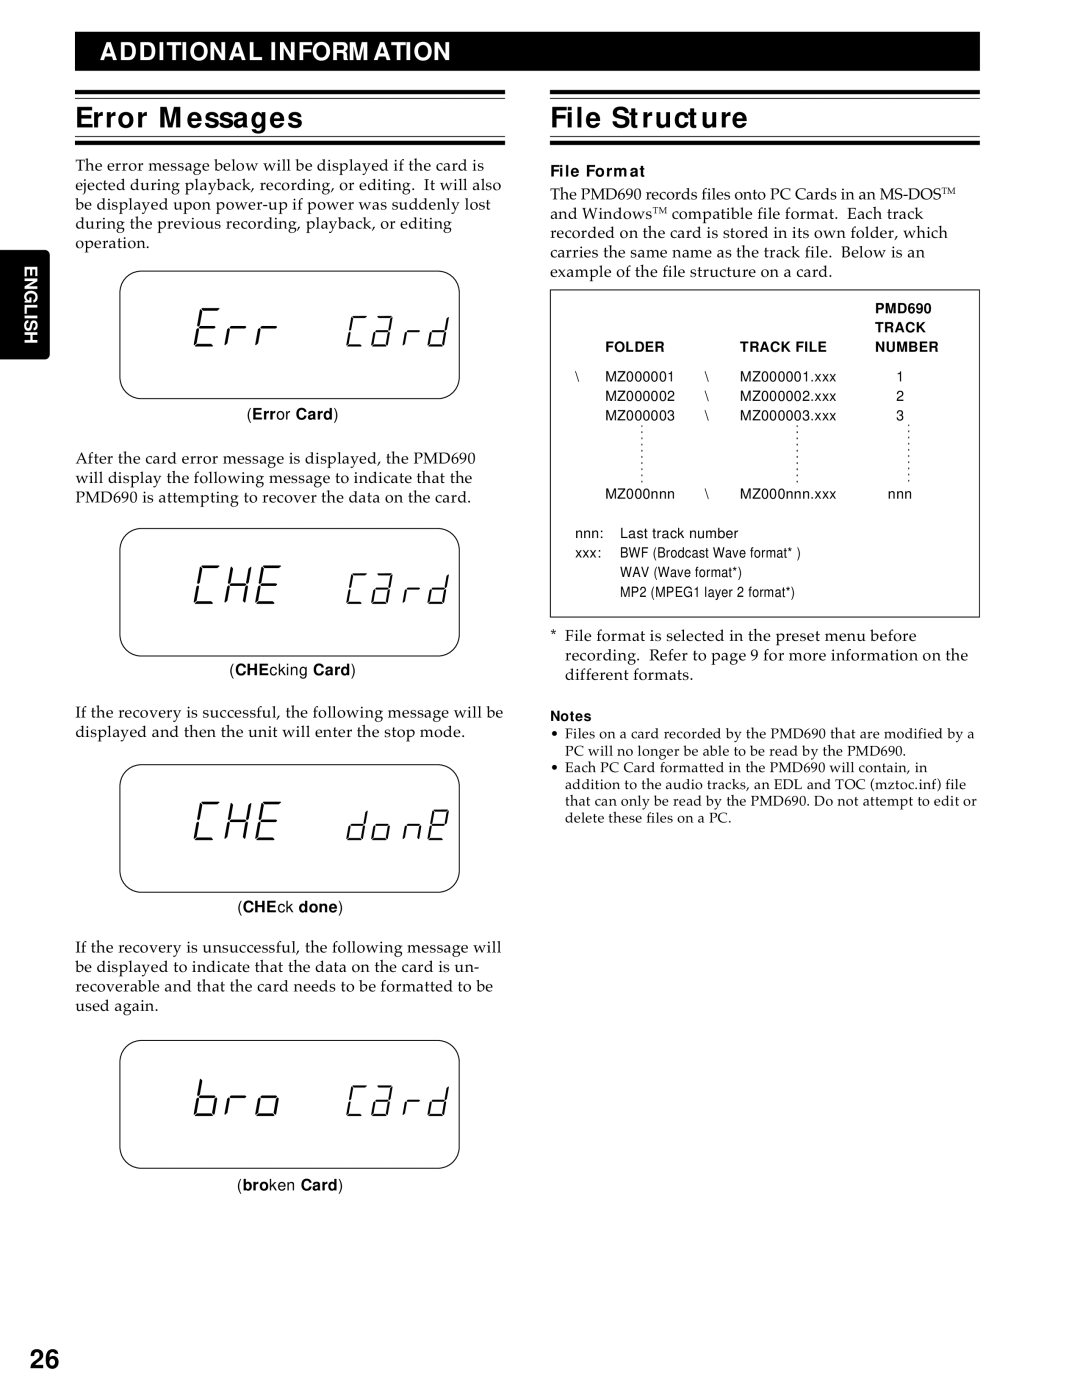 Marantz PMD690 manual Error Messages, File Structure, File Format 